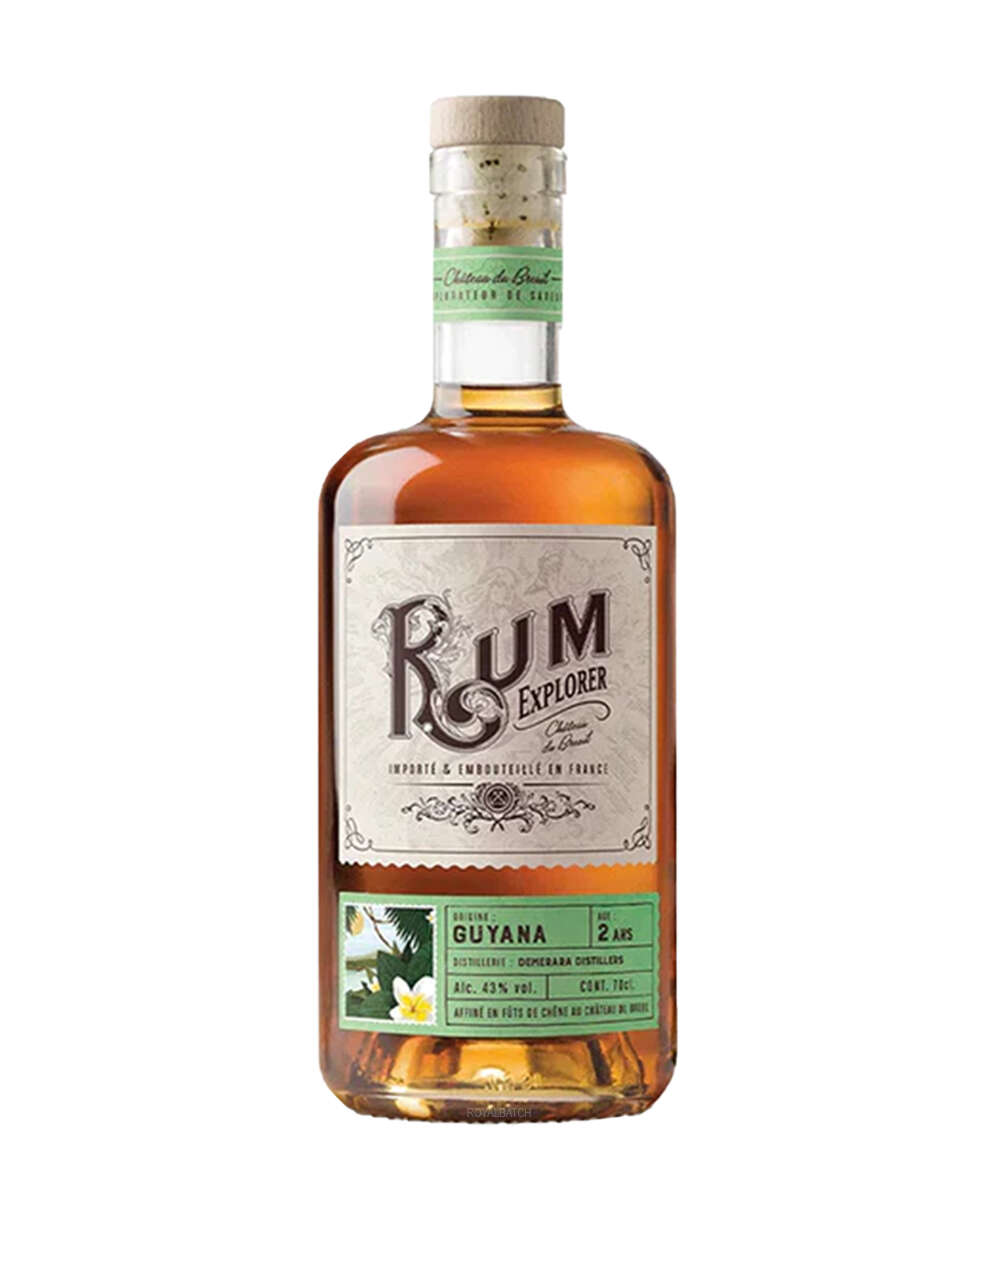 Rum Explorer Guyana 2 Year Old